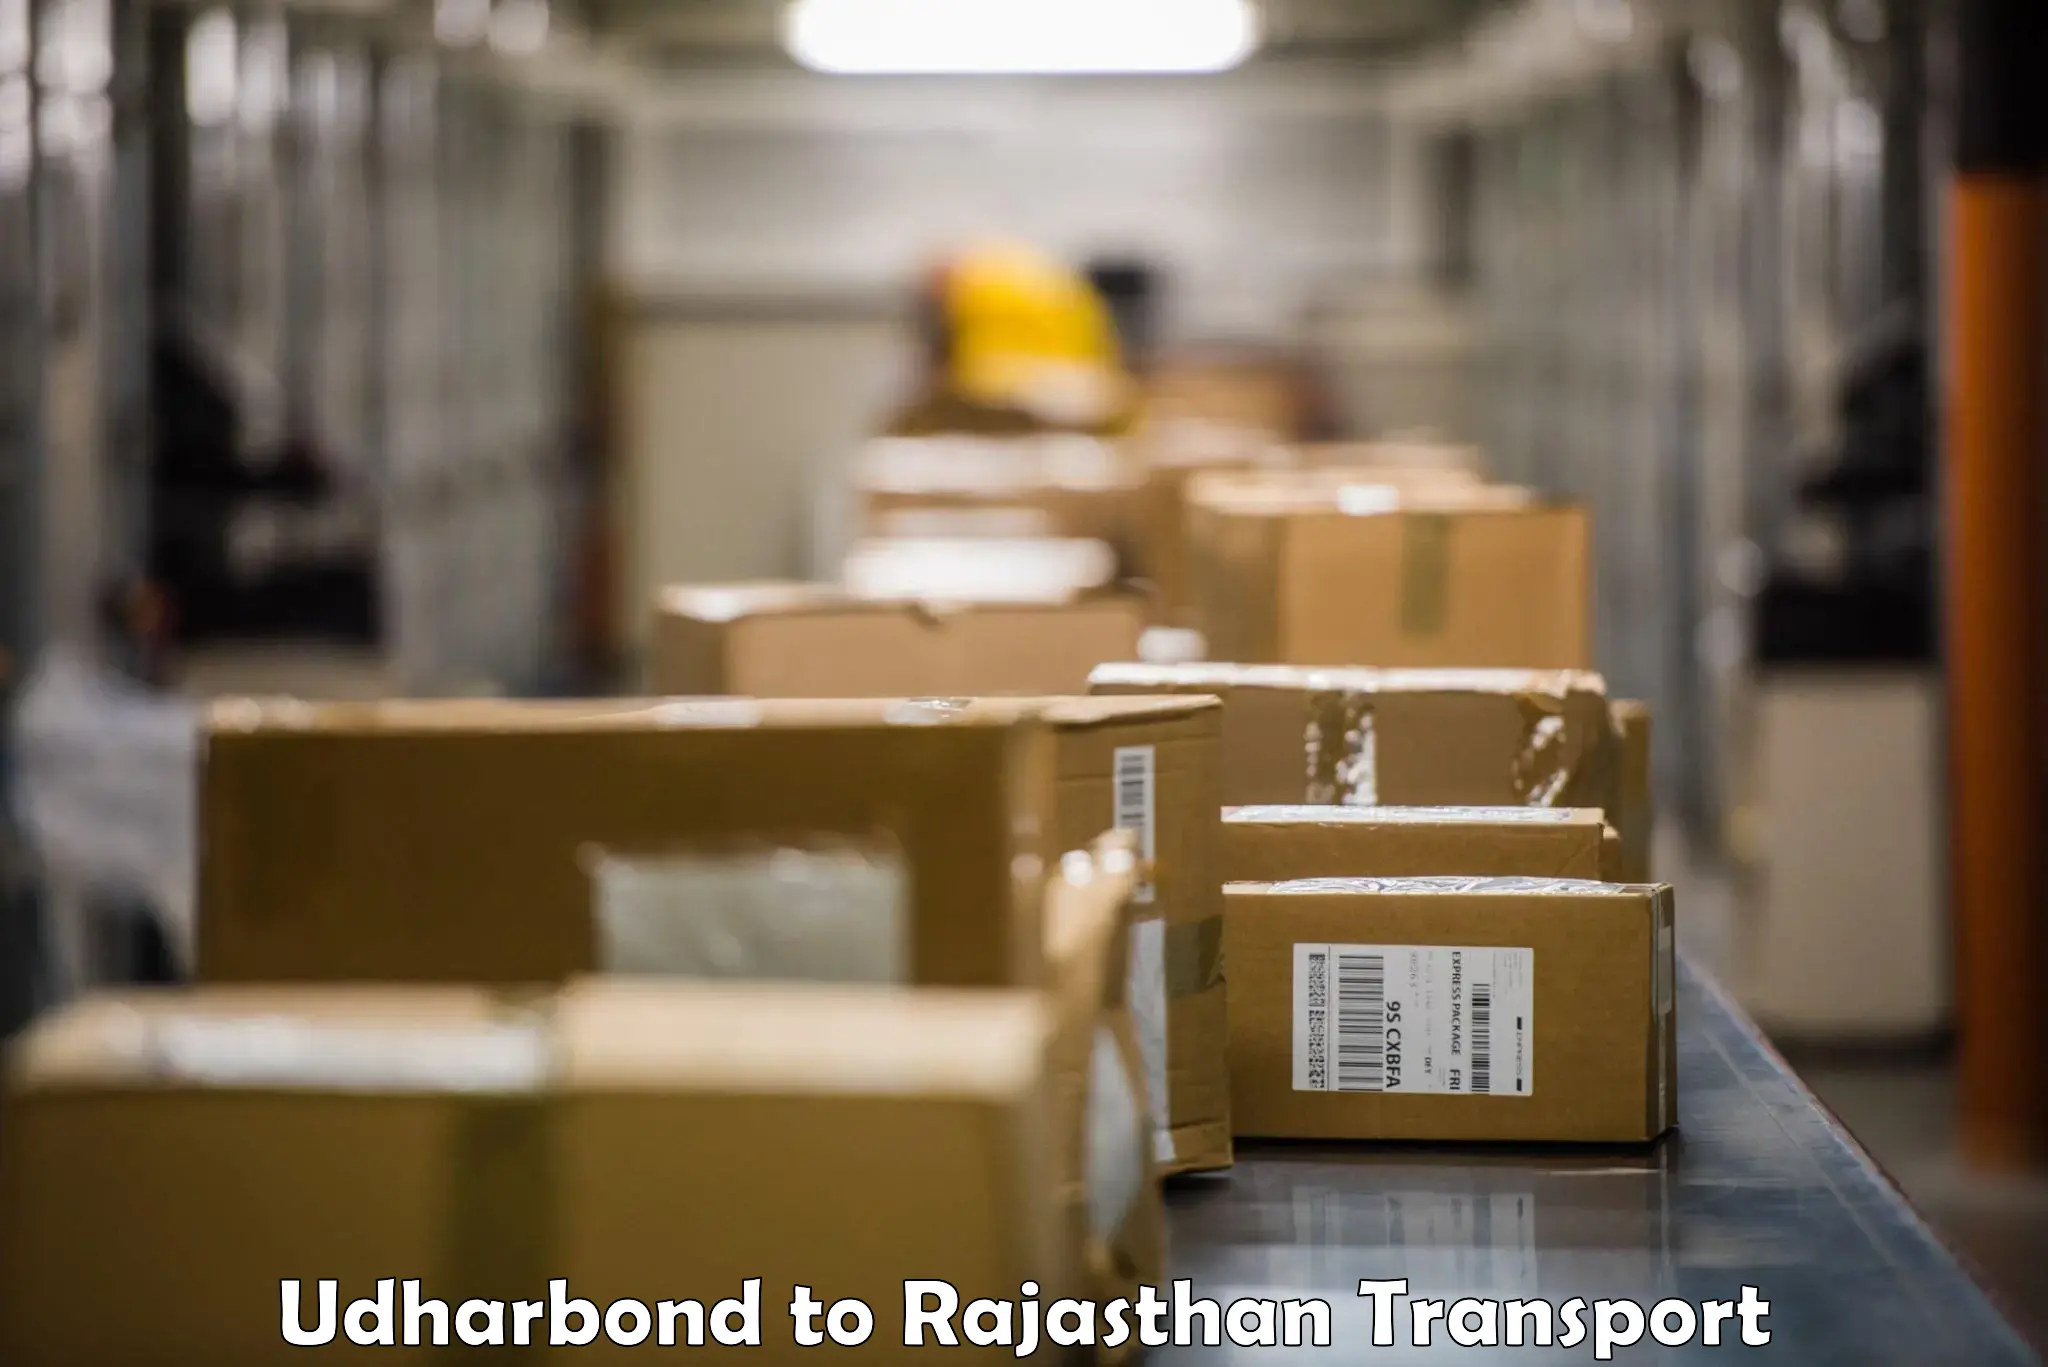 Truck transport companies in India Udharbond to Banswara